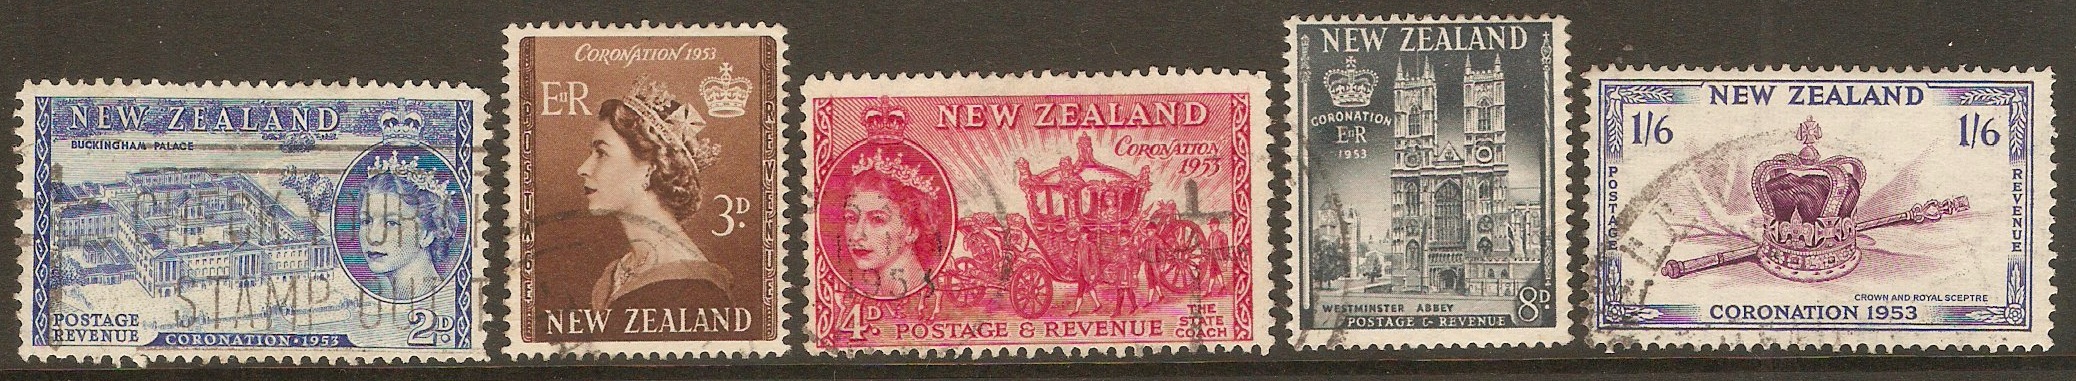 New Zealand 1953 Coronation Set. SG714-SG718.